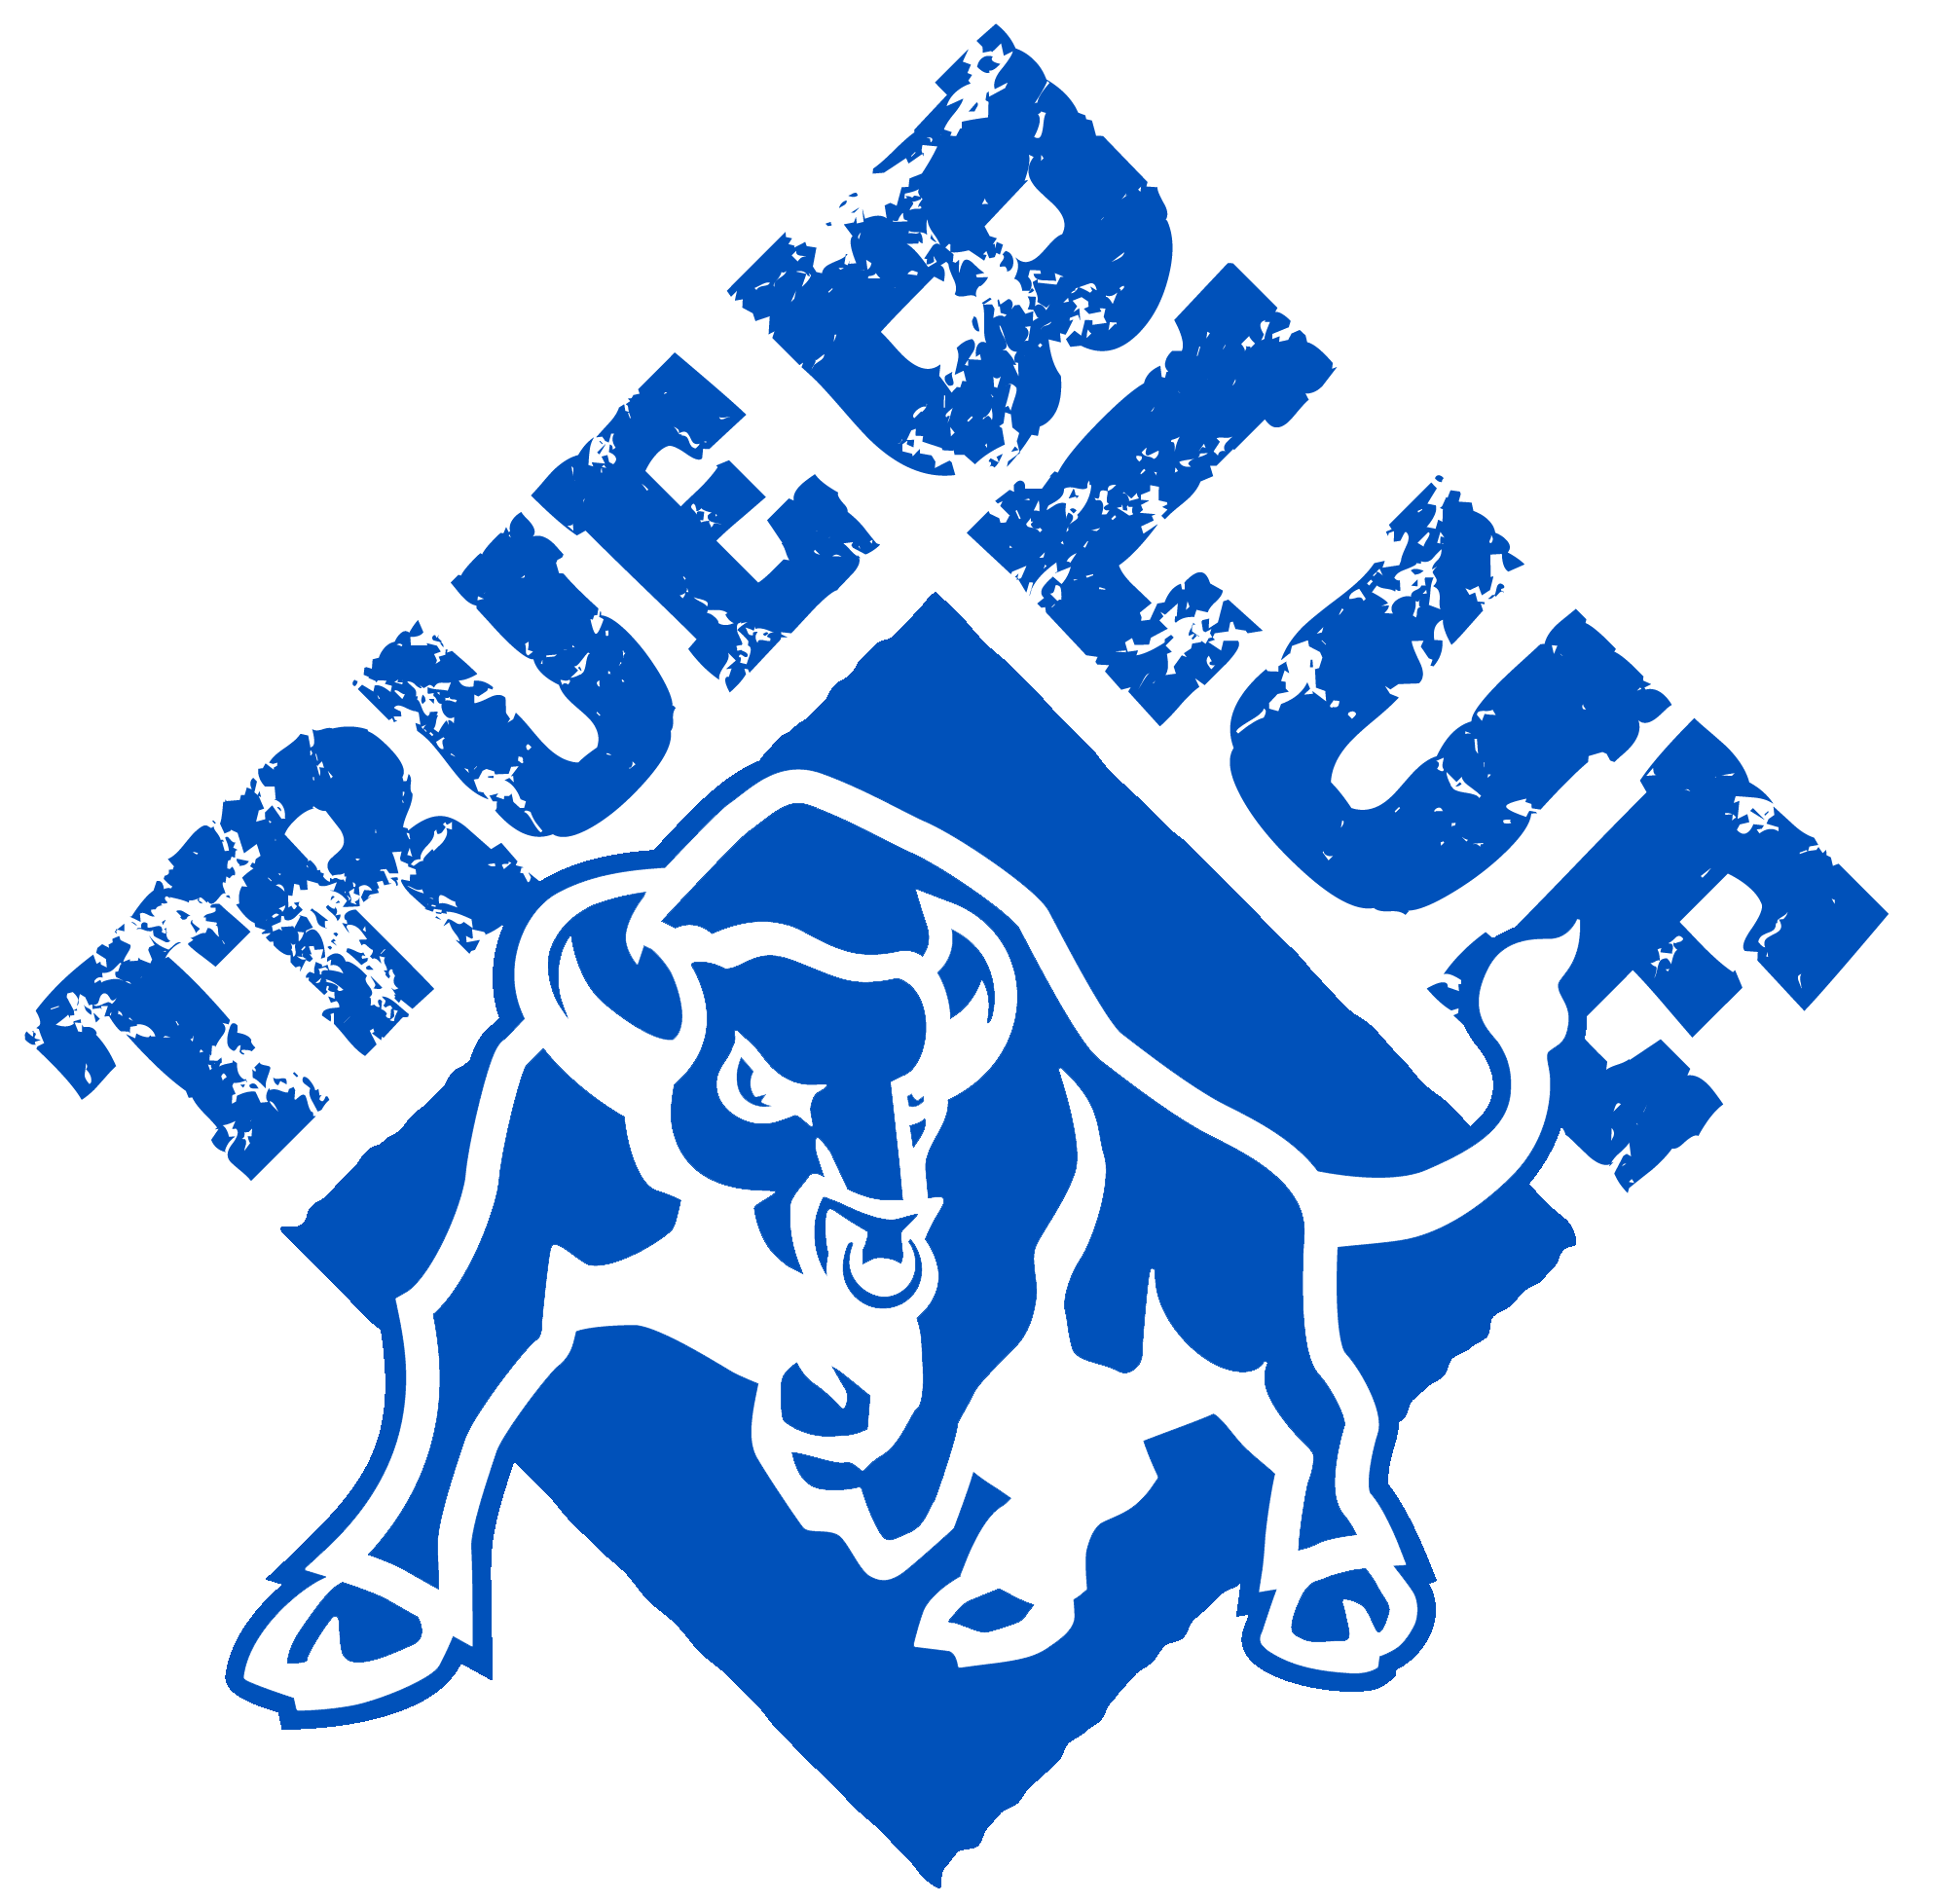 TB Logo - File:Blue TB logo-1.png - Wikimedia Commons